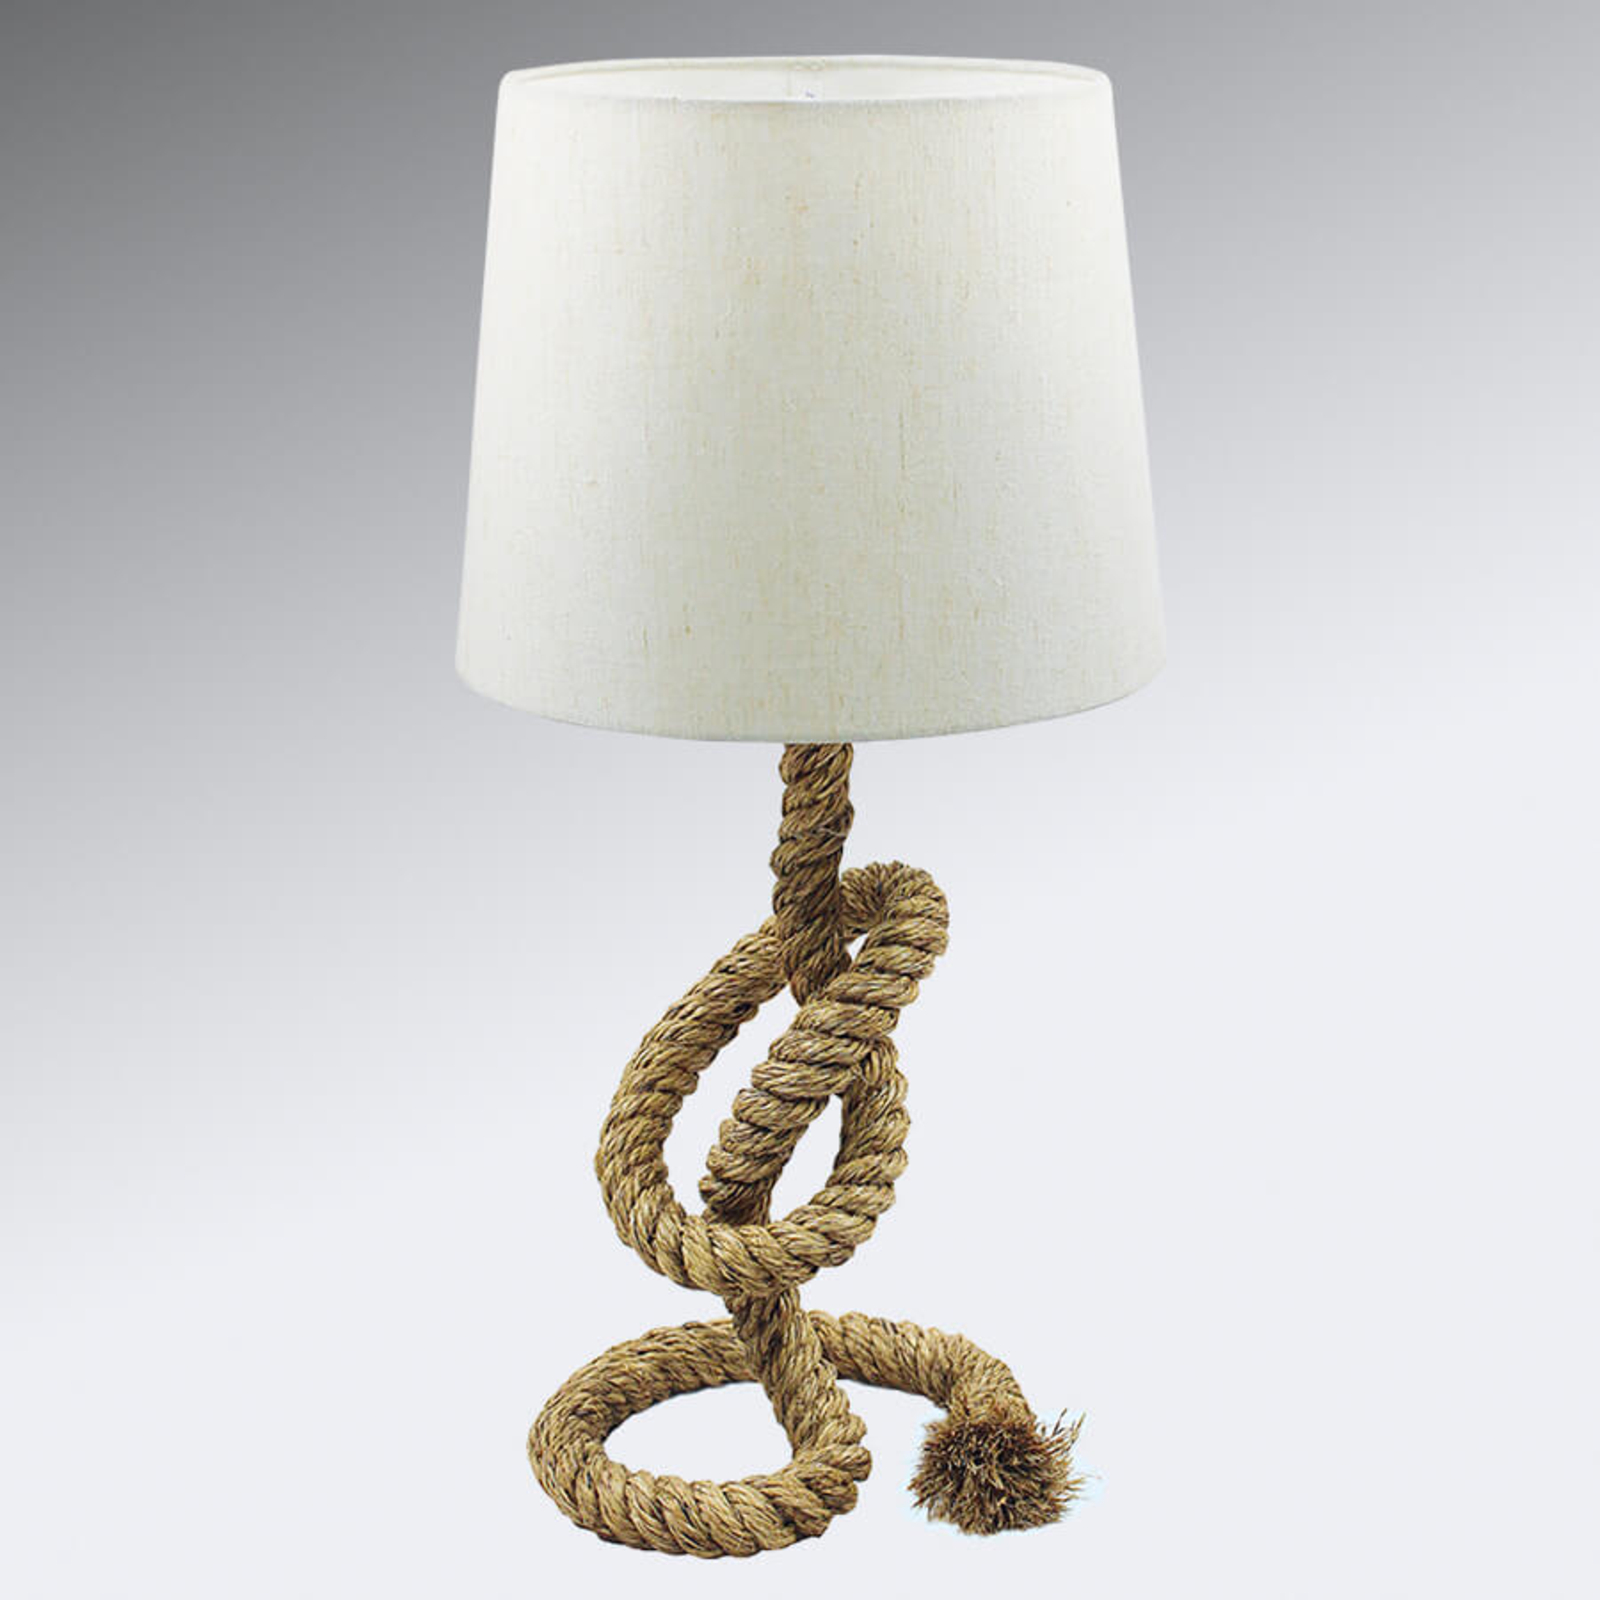 Lampe corde Lieke avec abat-jour blanc